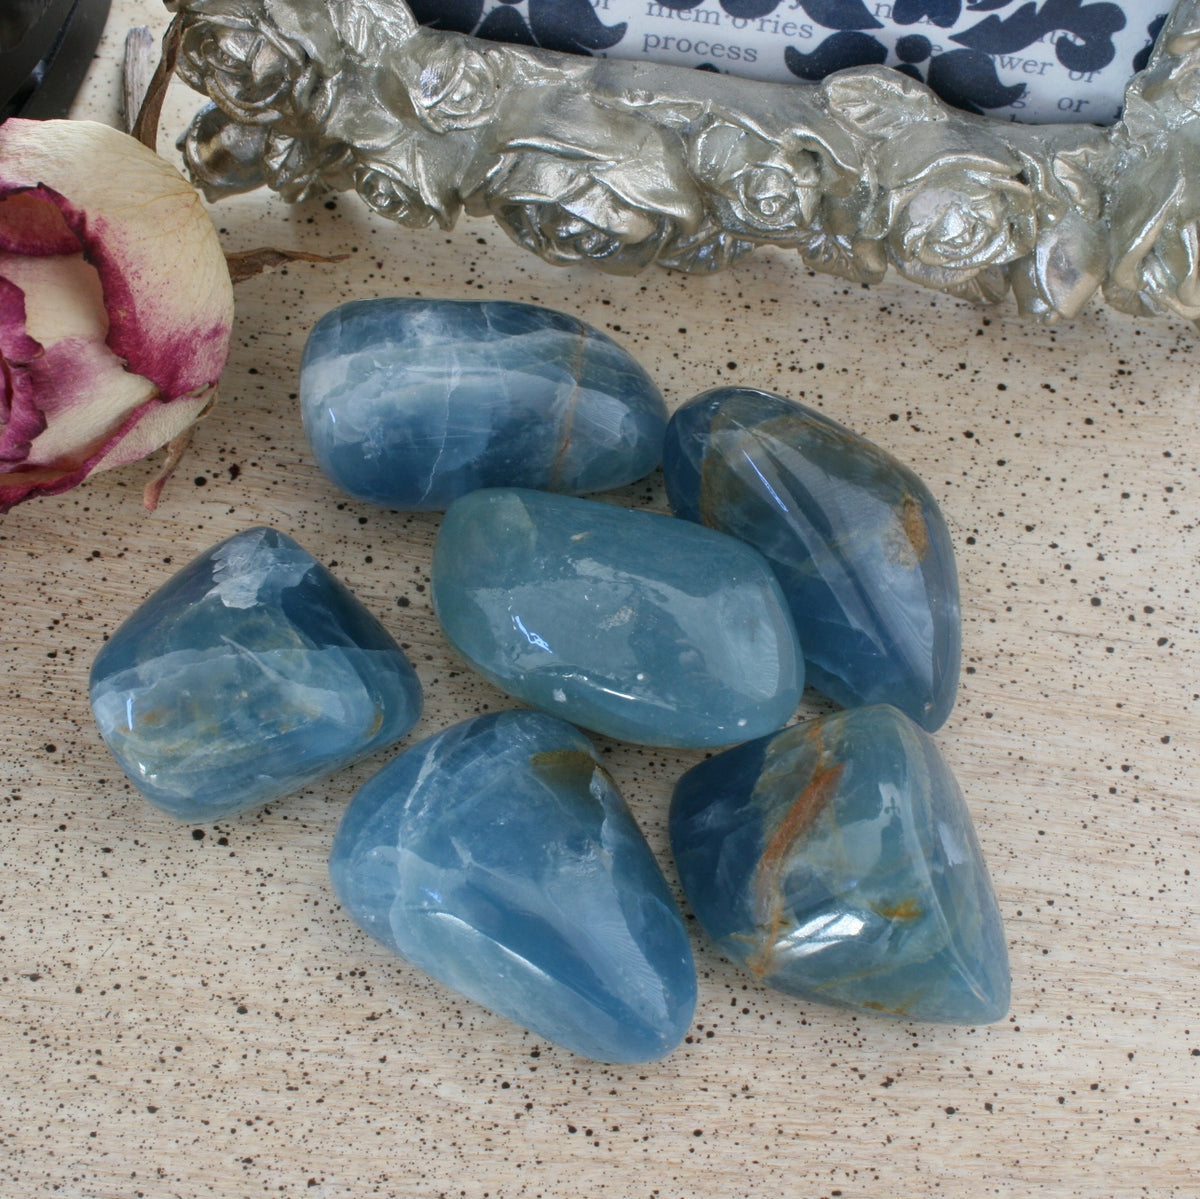 Blue Calcite / Blue Onyx Tumbled Stone from Argentina, also called Lemurian Aquatine Calcite, TUM12